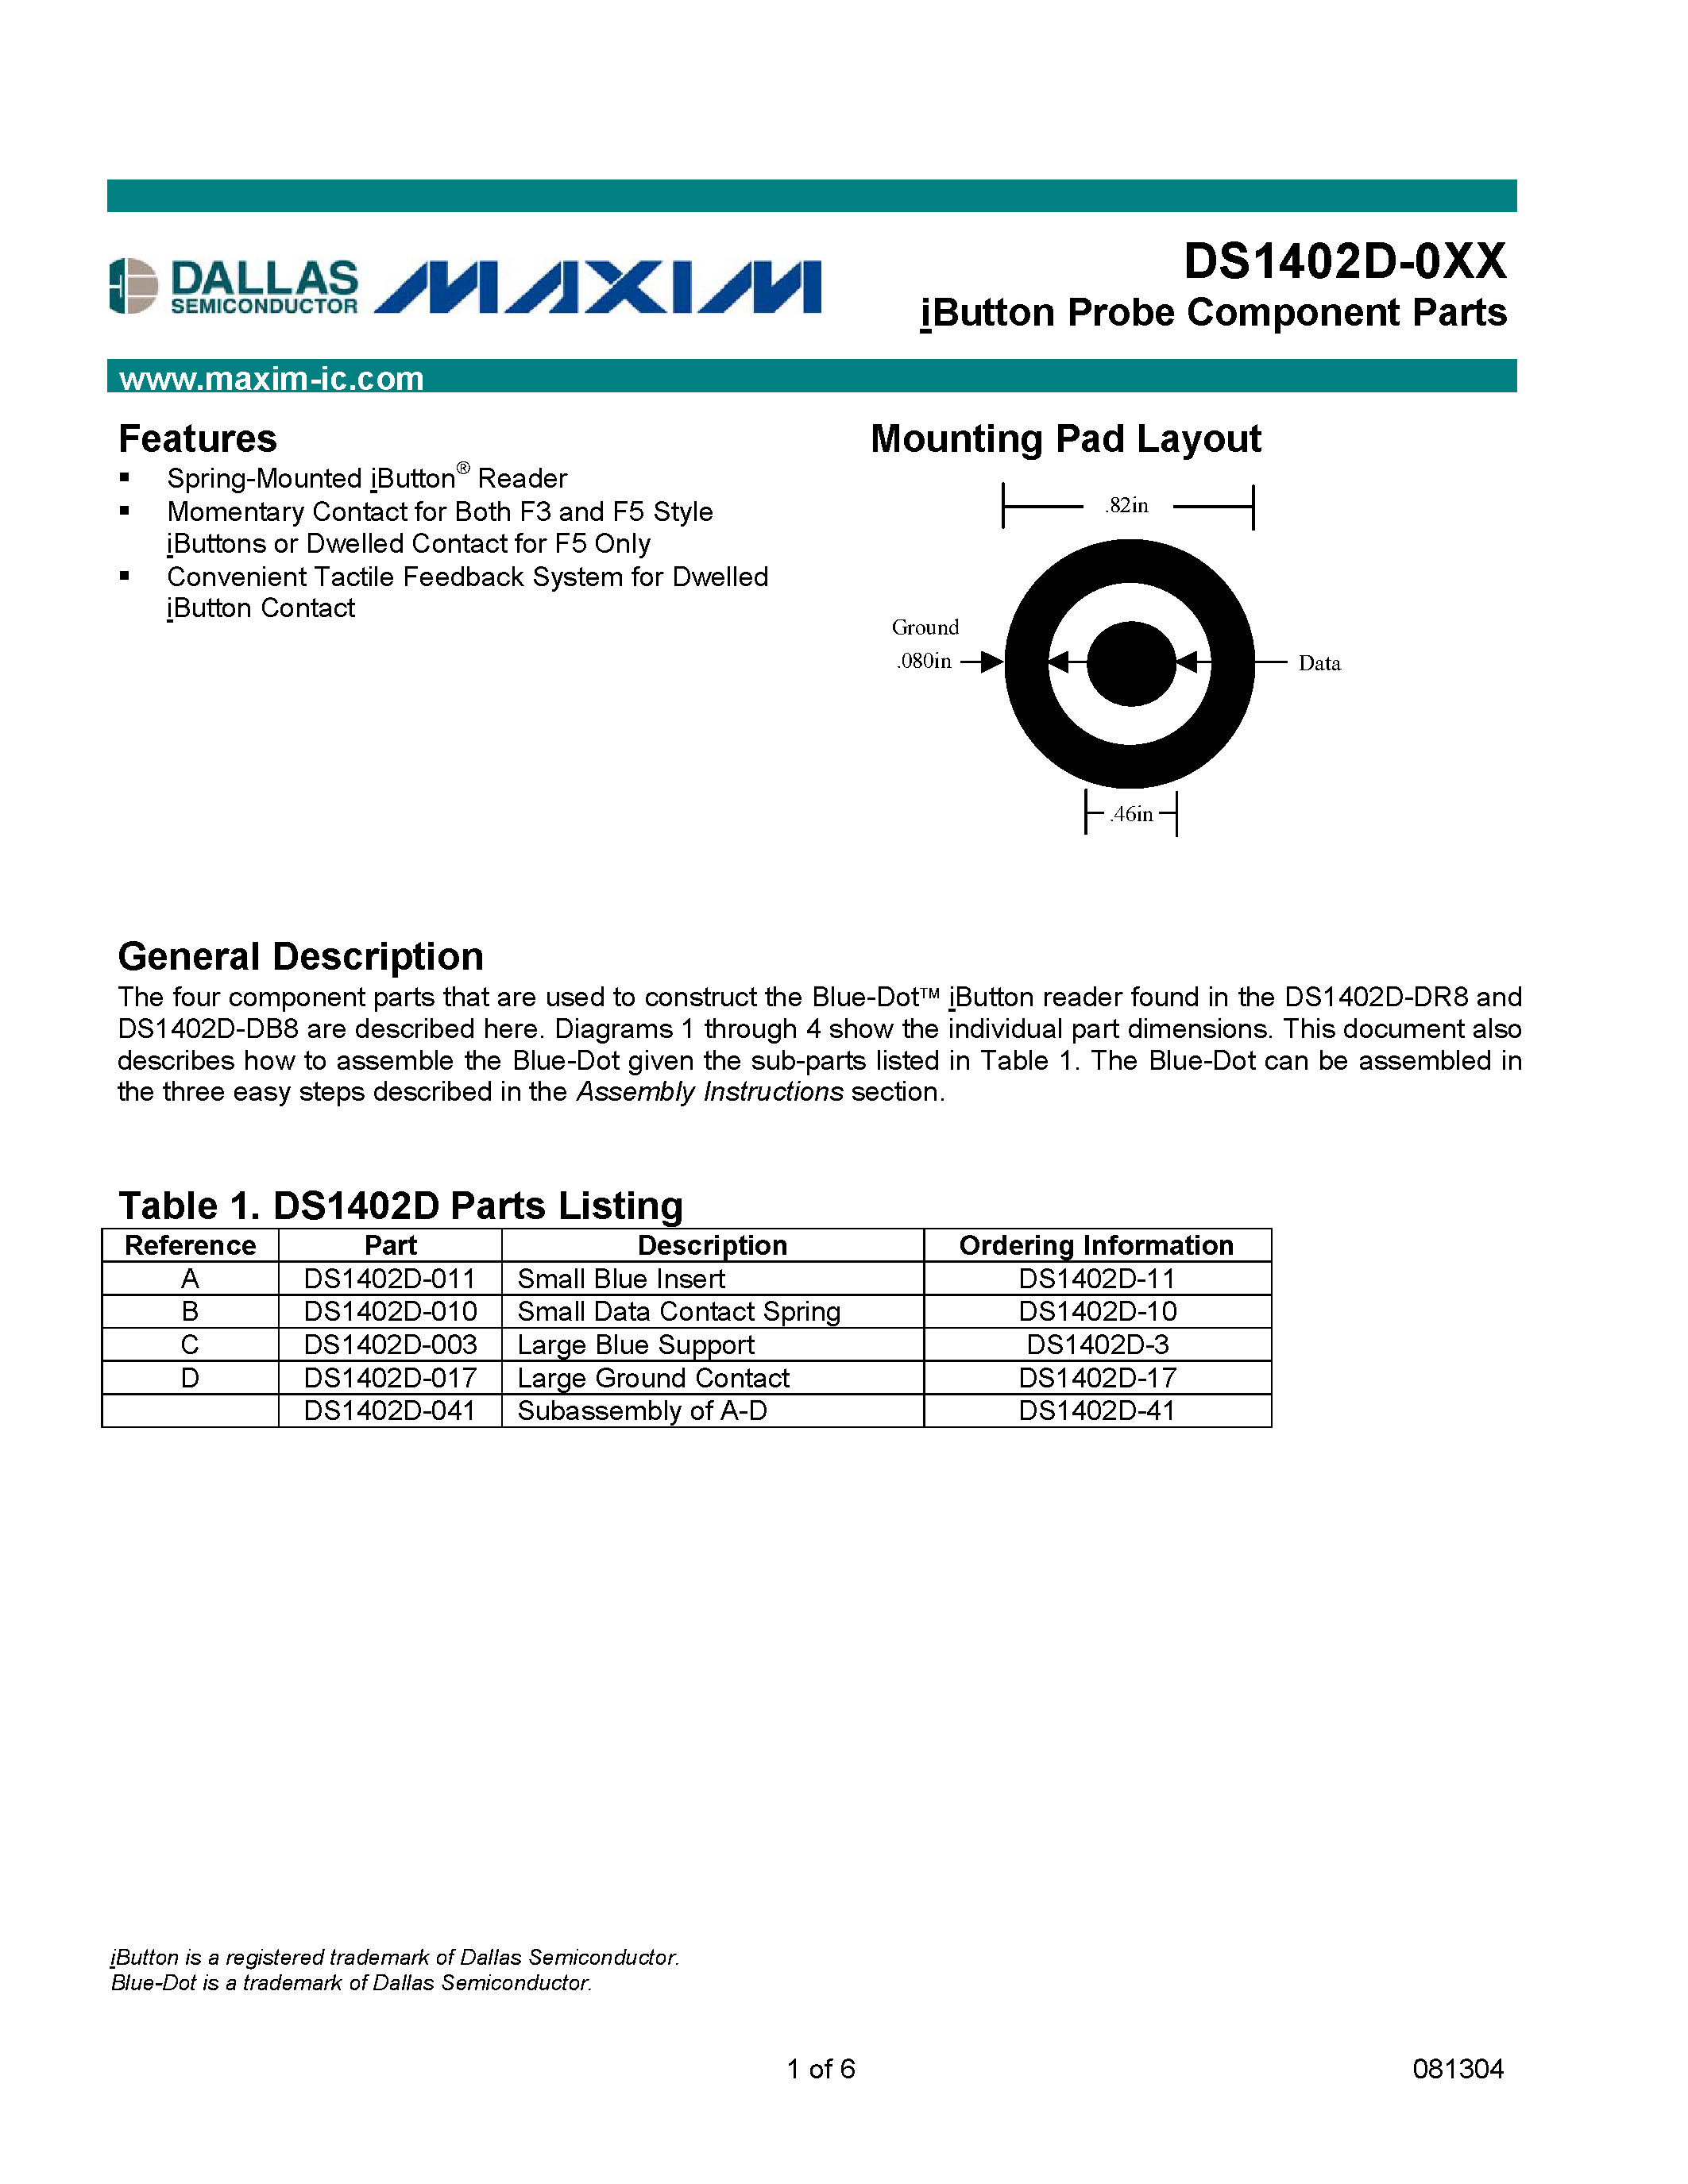 Datasheet DS1402D-3 - iButton Probe Component Parts page 1